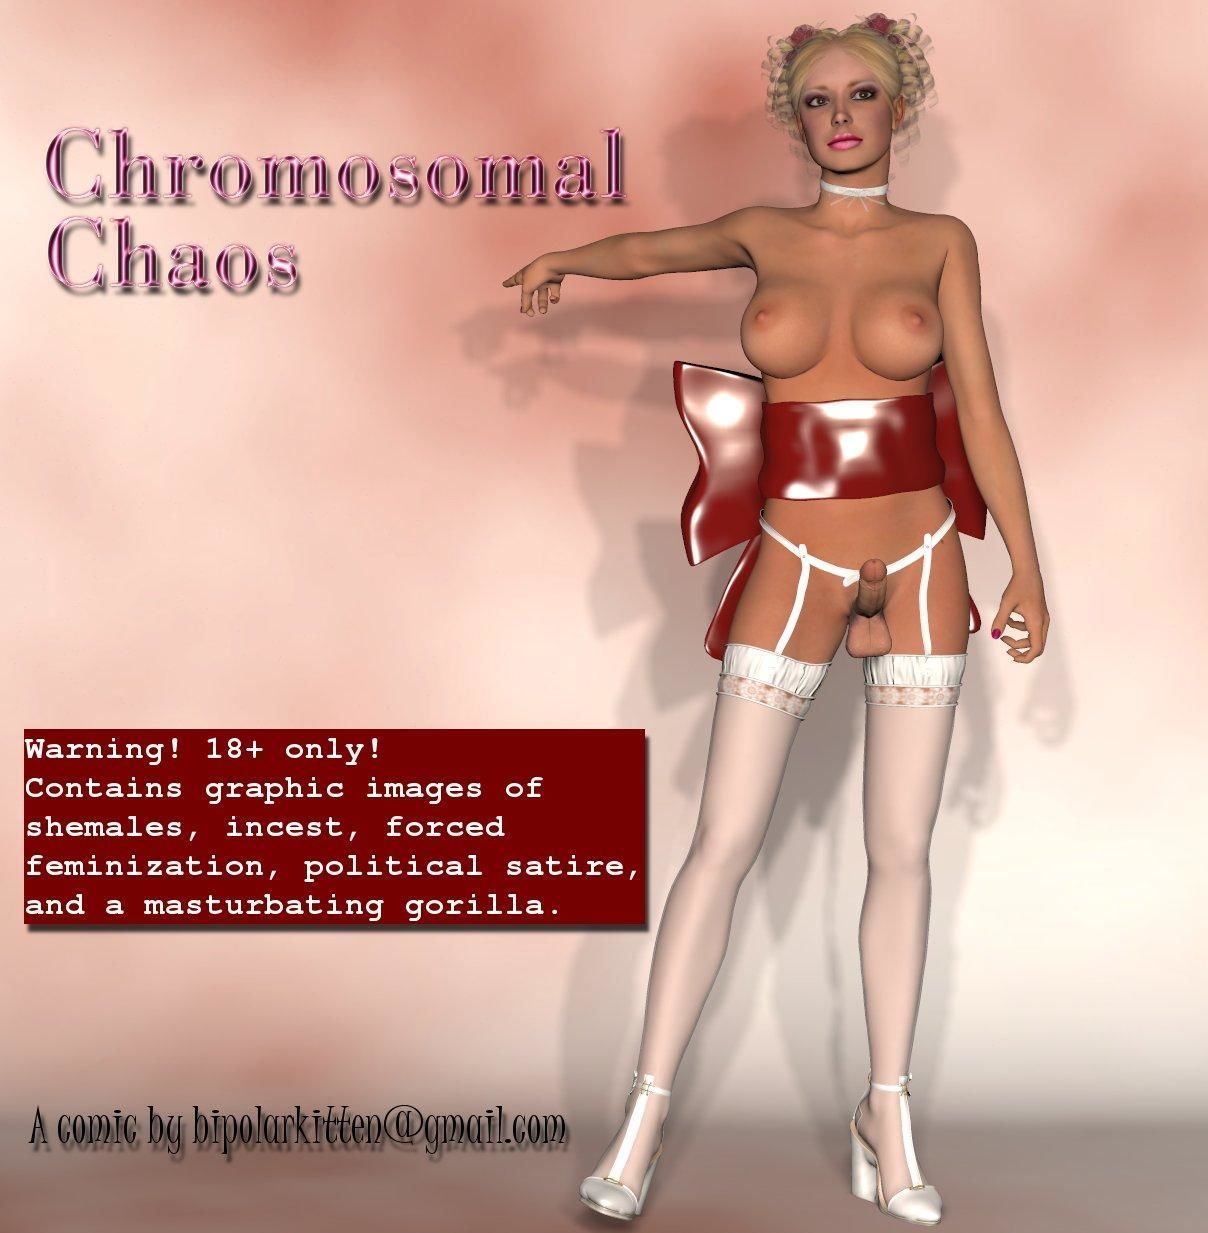 kromozom kaos